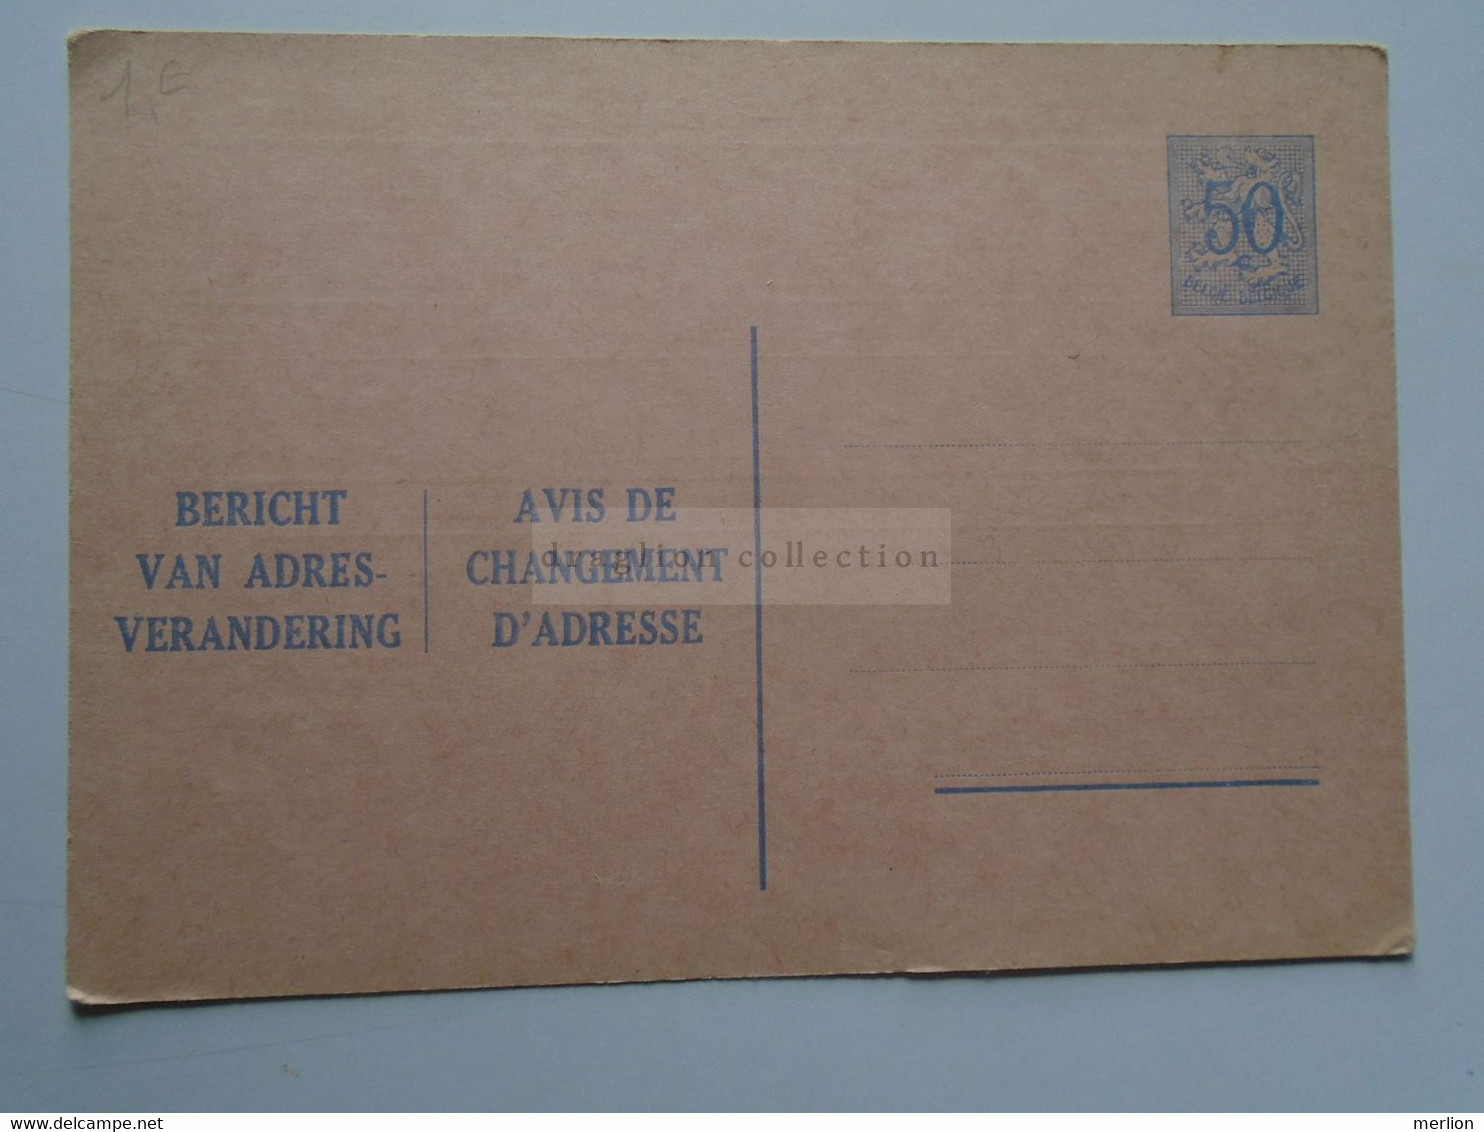 D179276  Entier Postal - 1965 Cancel  CAVAILLON  (Vaucluse) Paul DONAT    To MAZAMET - Avviso Cambiamento Indirizzo